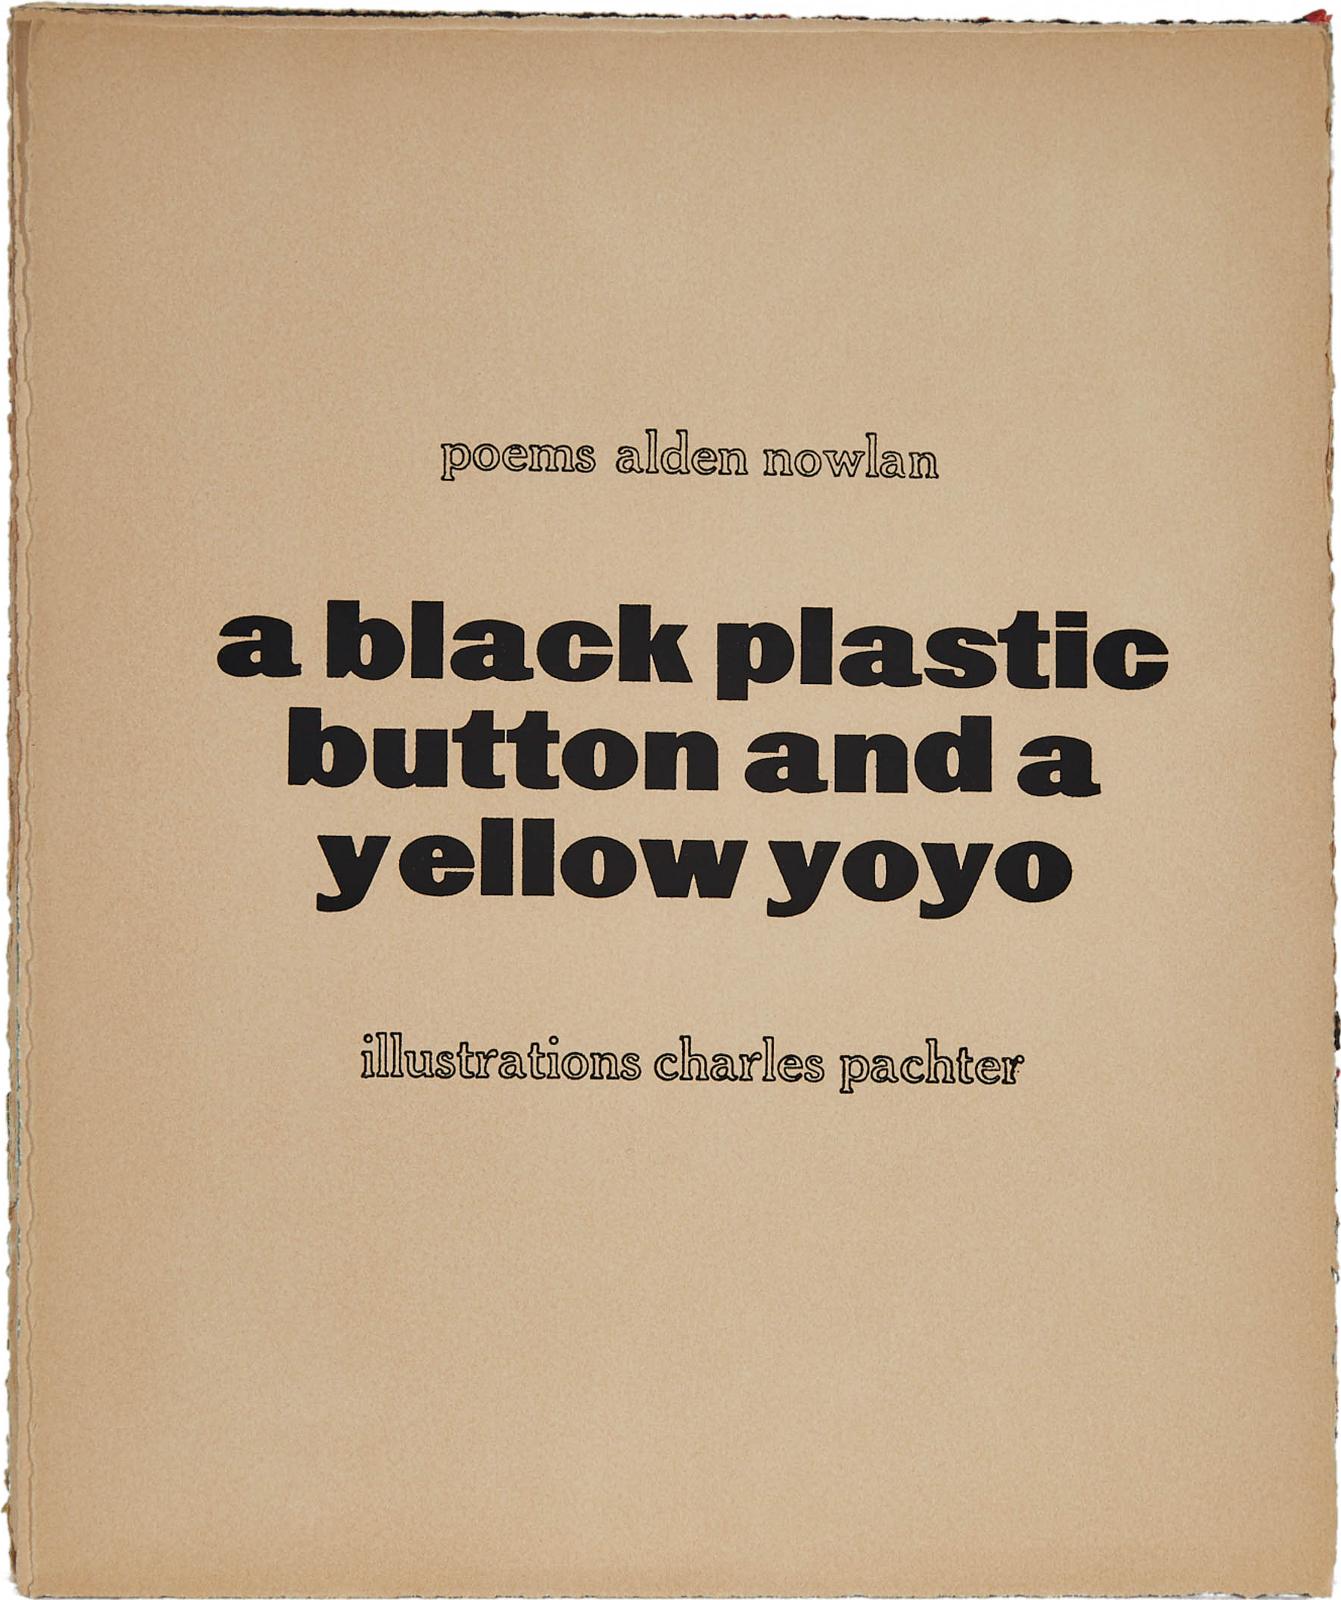 Charles Pachter (1942) - A Black Plastic Button And A Yellow Yo-Yo, 1968